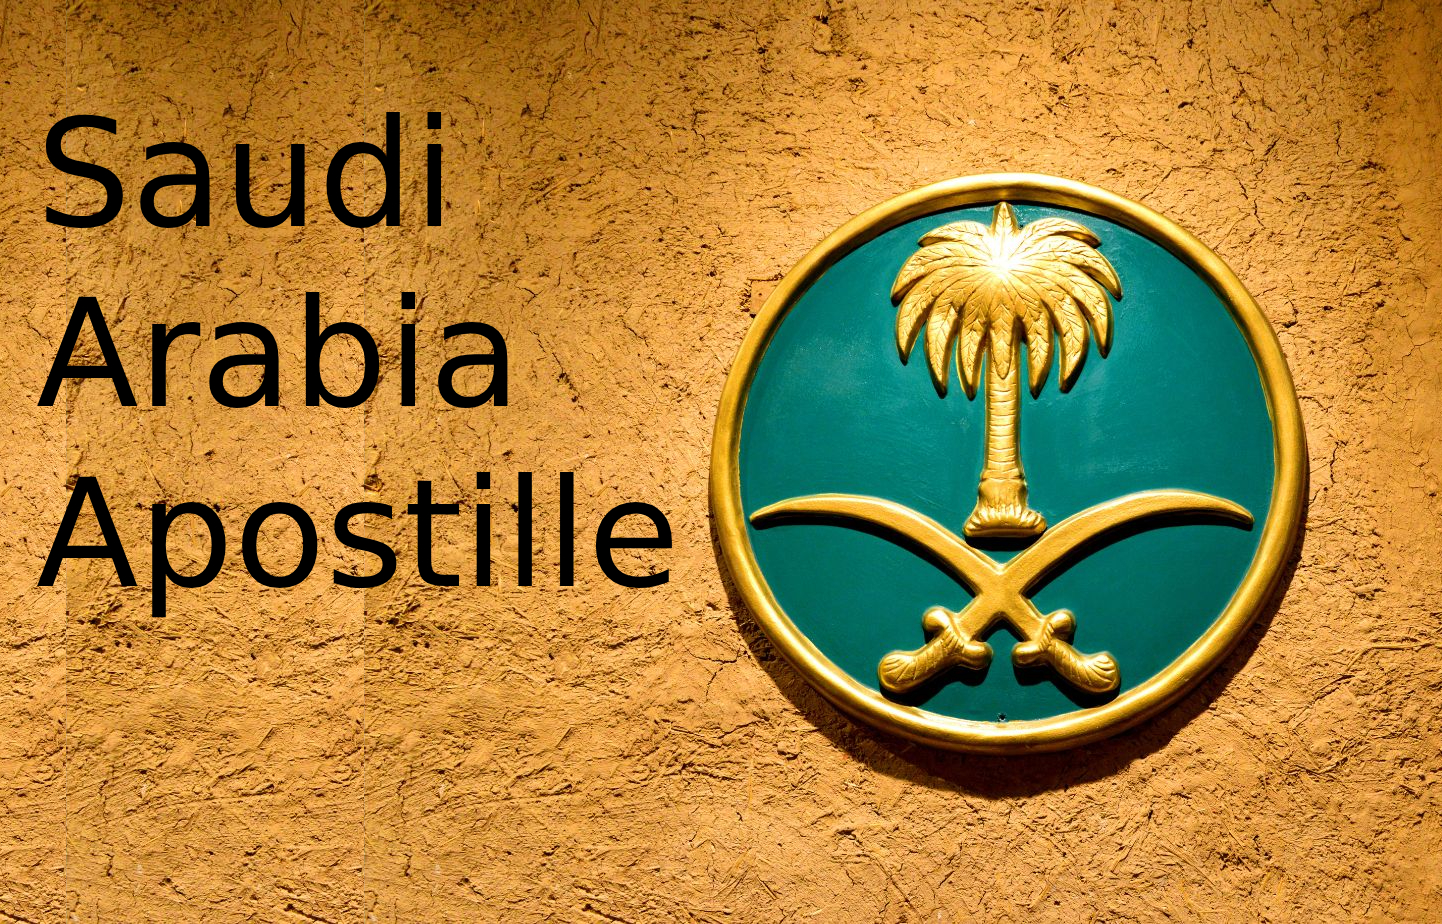 Saudi Arabia Apostille